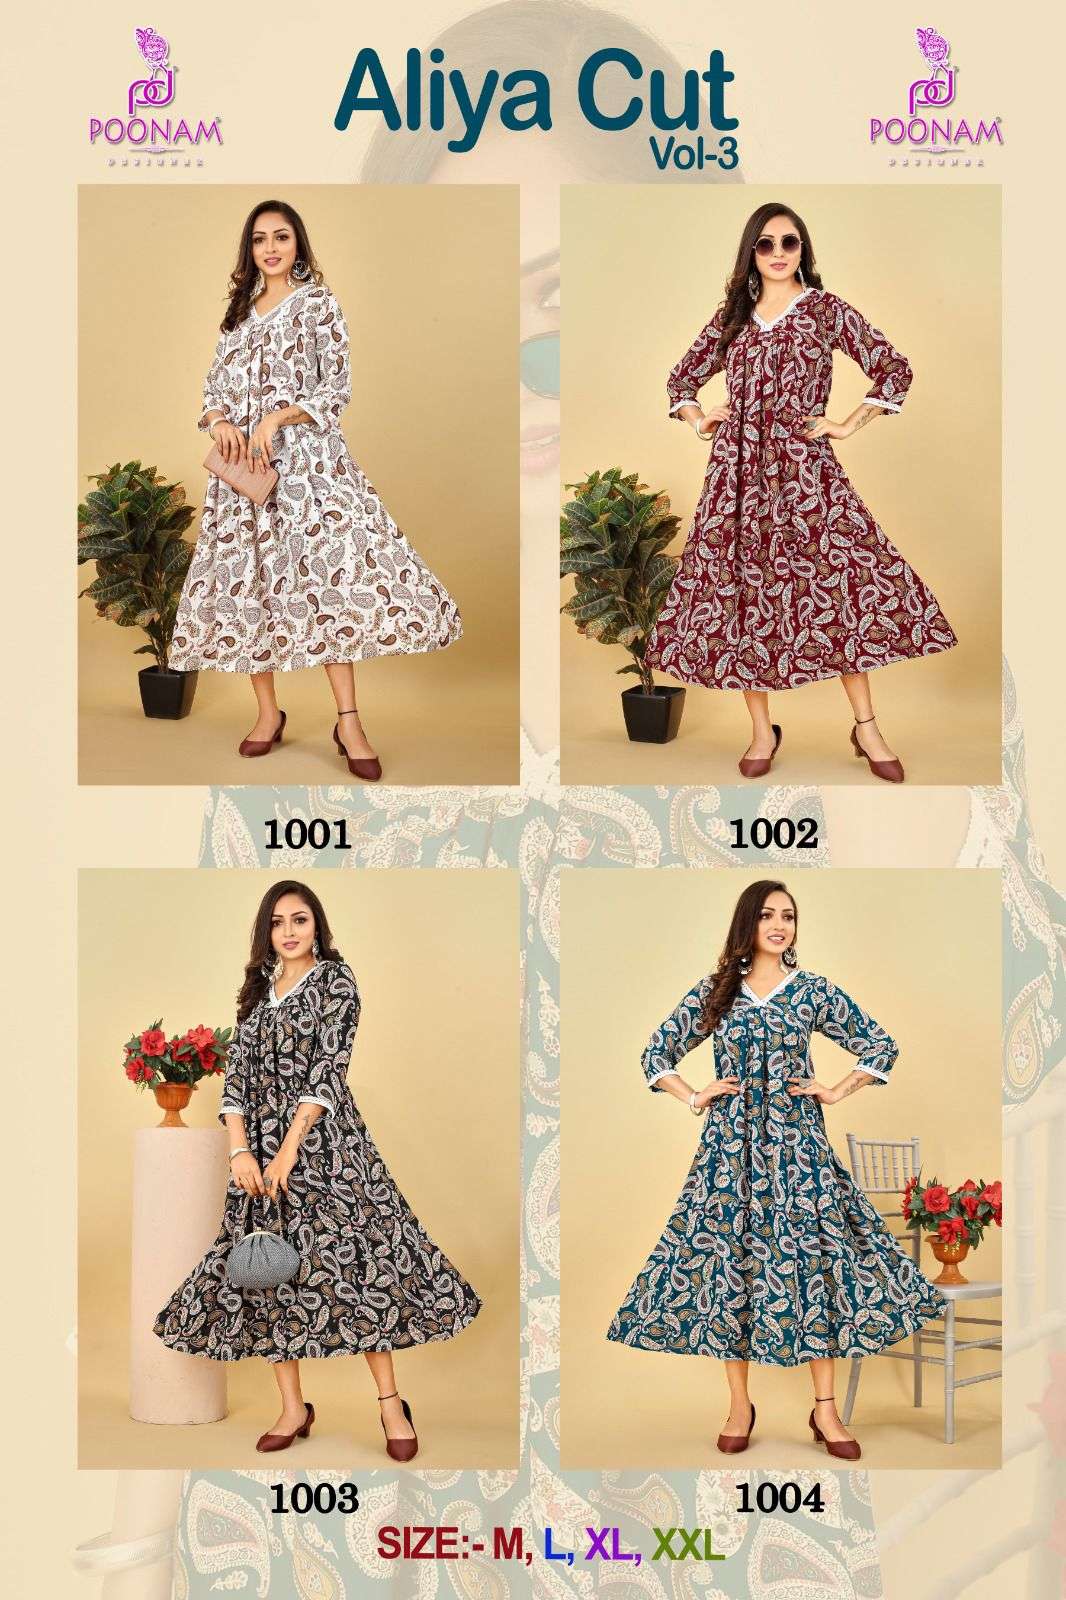 poonam designer aliya cut vol-3 1001-1004 series imported viscose printed rayon fabric aliya cut gown catalogue design 2023